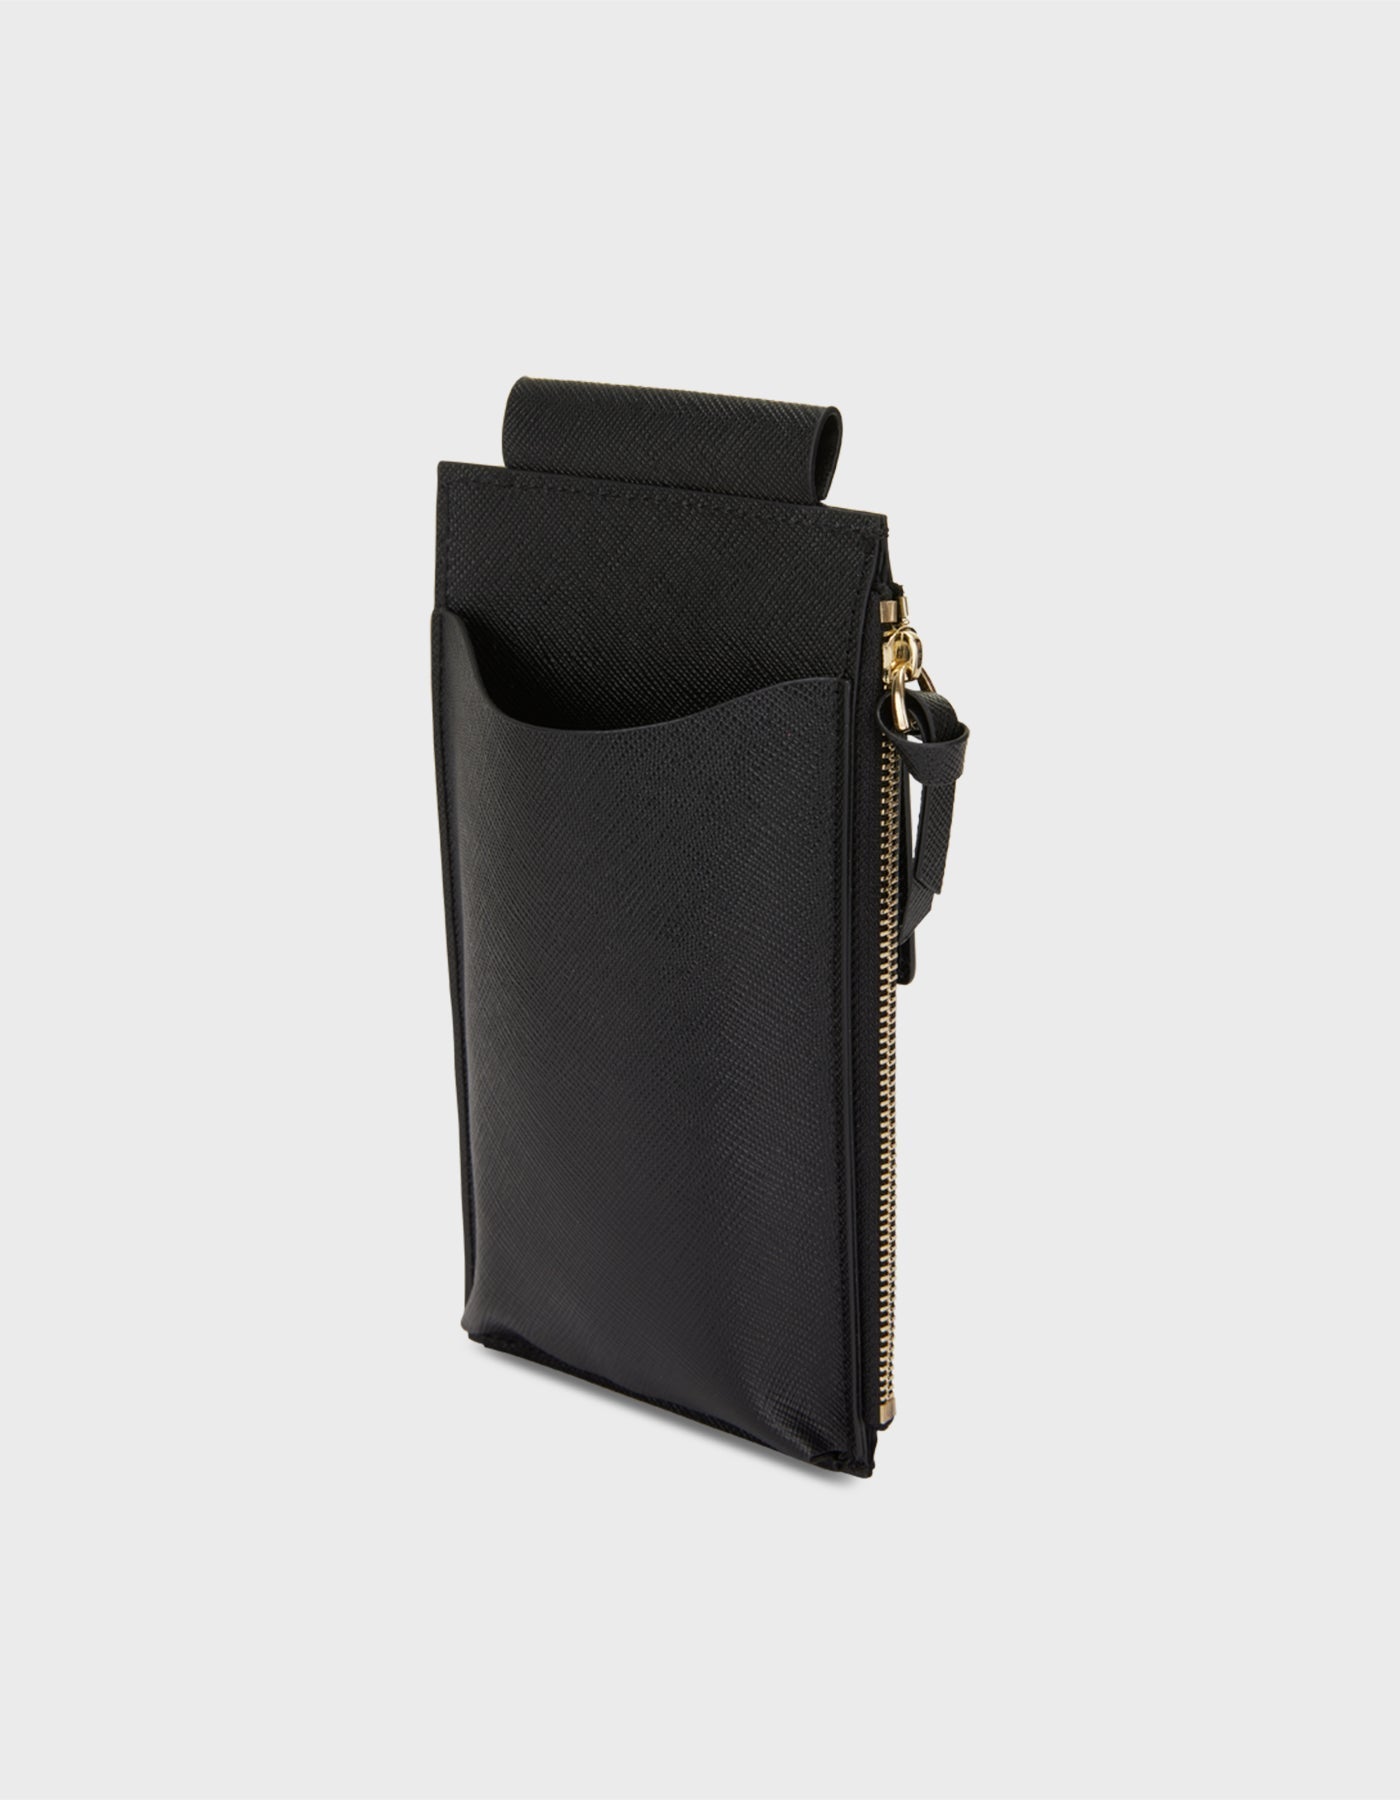 HiVa Atelier | Crossbody Phone Bag Black | Beautiful and Versatile